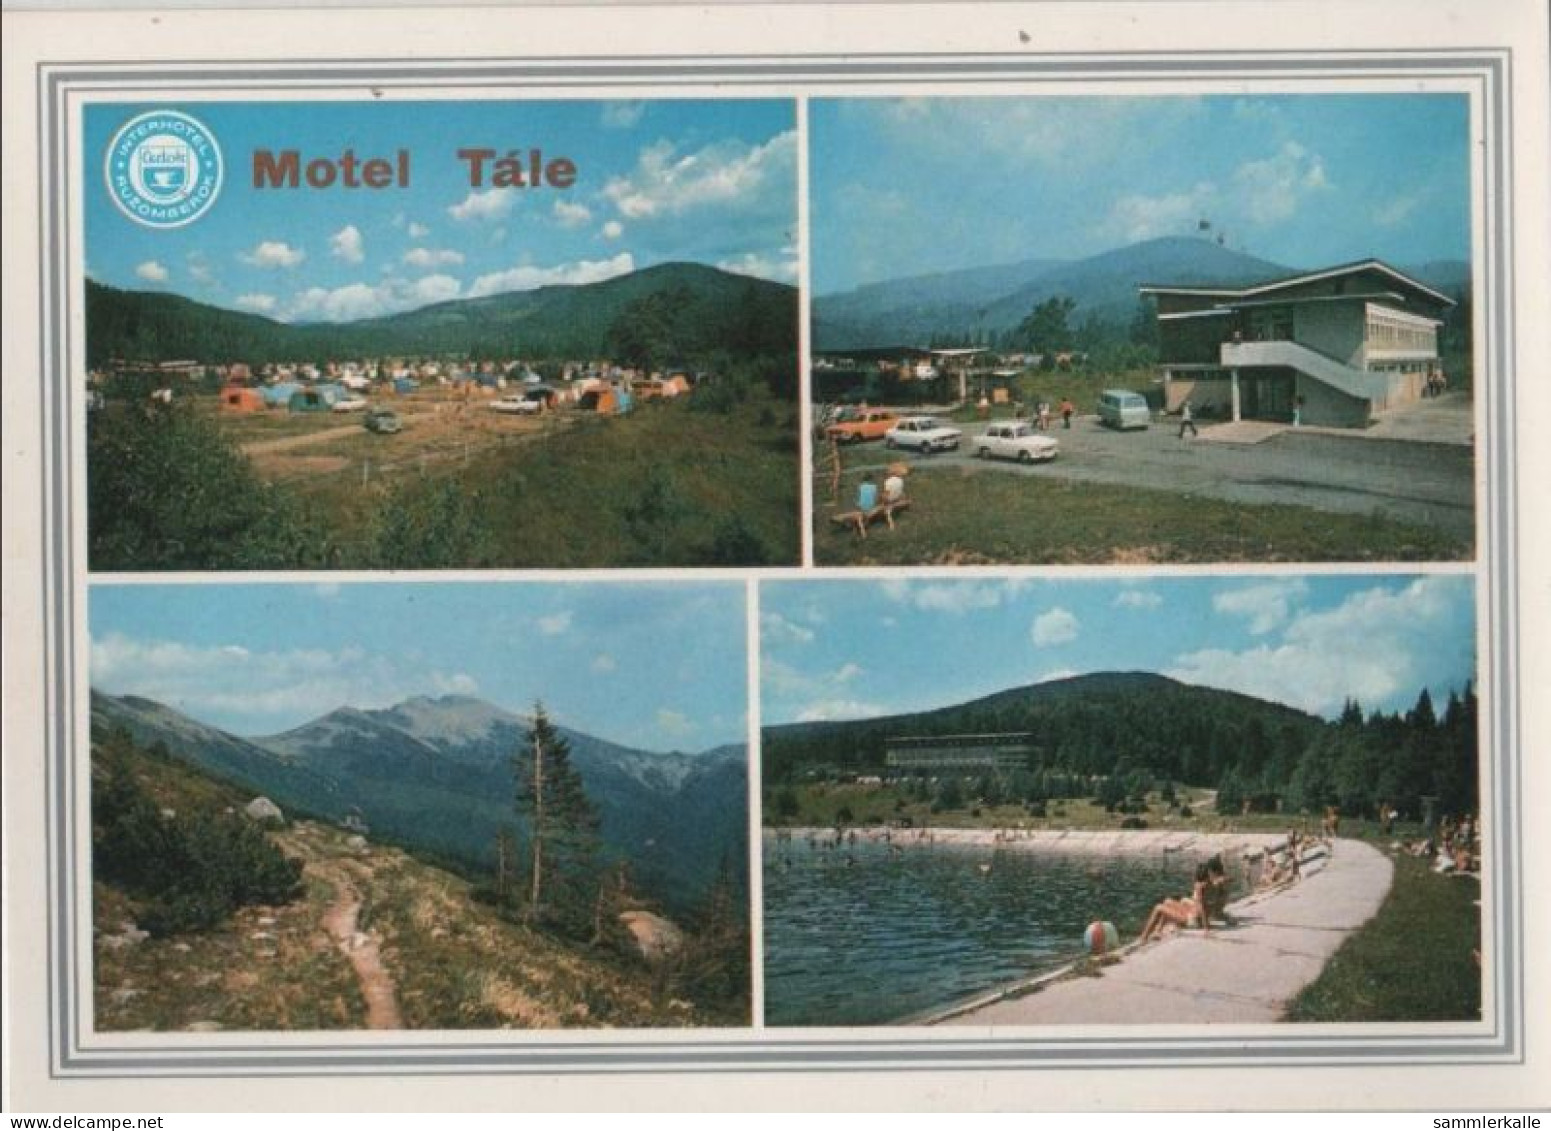 109584 - Nizke Tatry - Niedere Tatra - Tschechien - Motel Tale - Slovakia